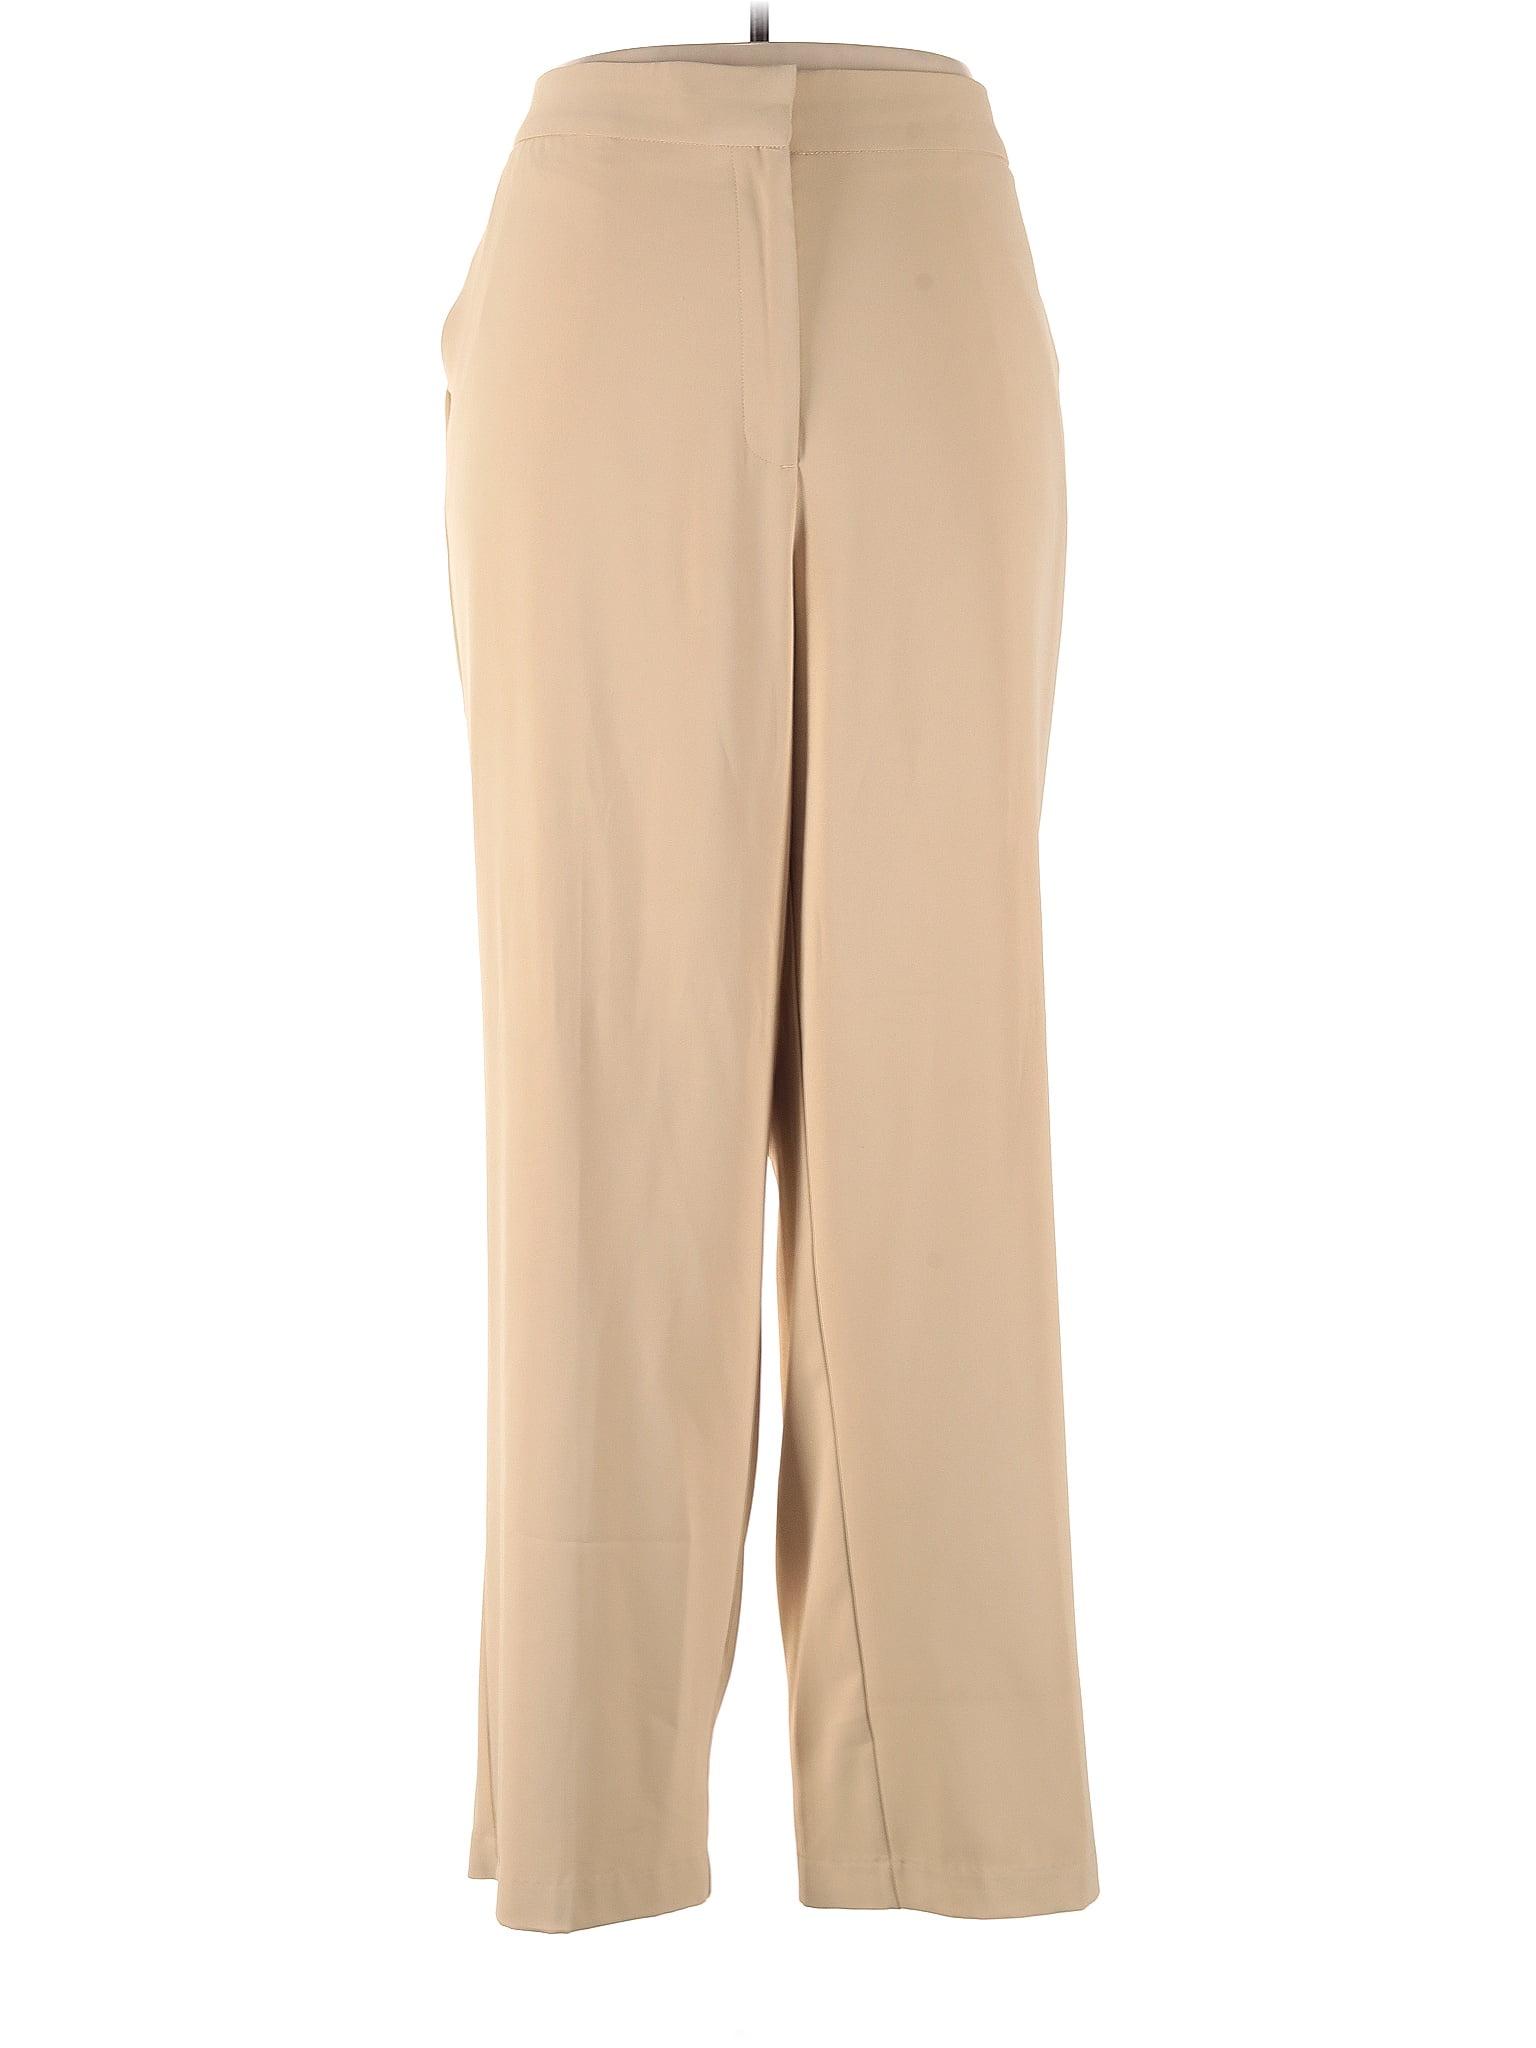 Rachel Zoe Solid Brown Tan Casual Pants Size 12 - 82% off